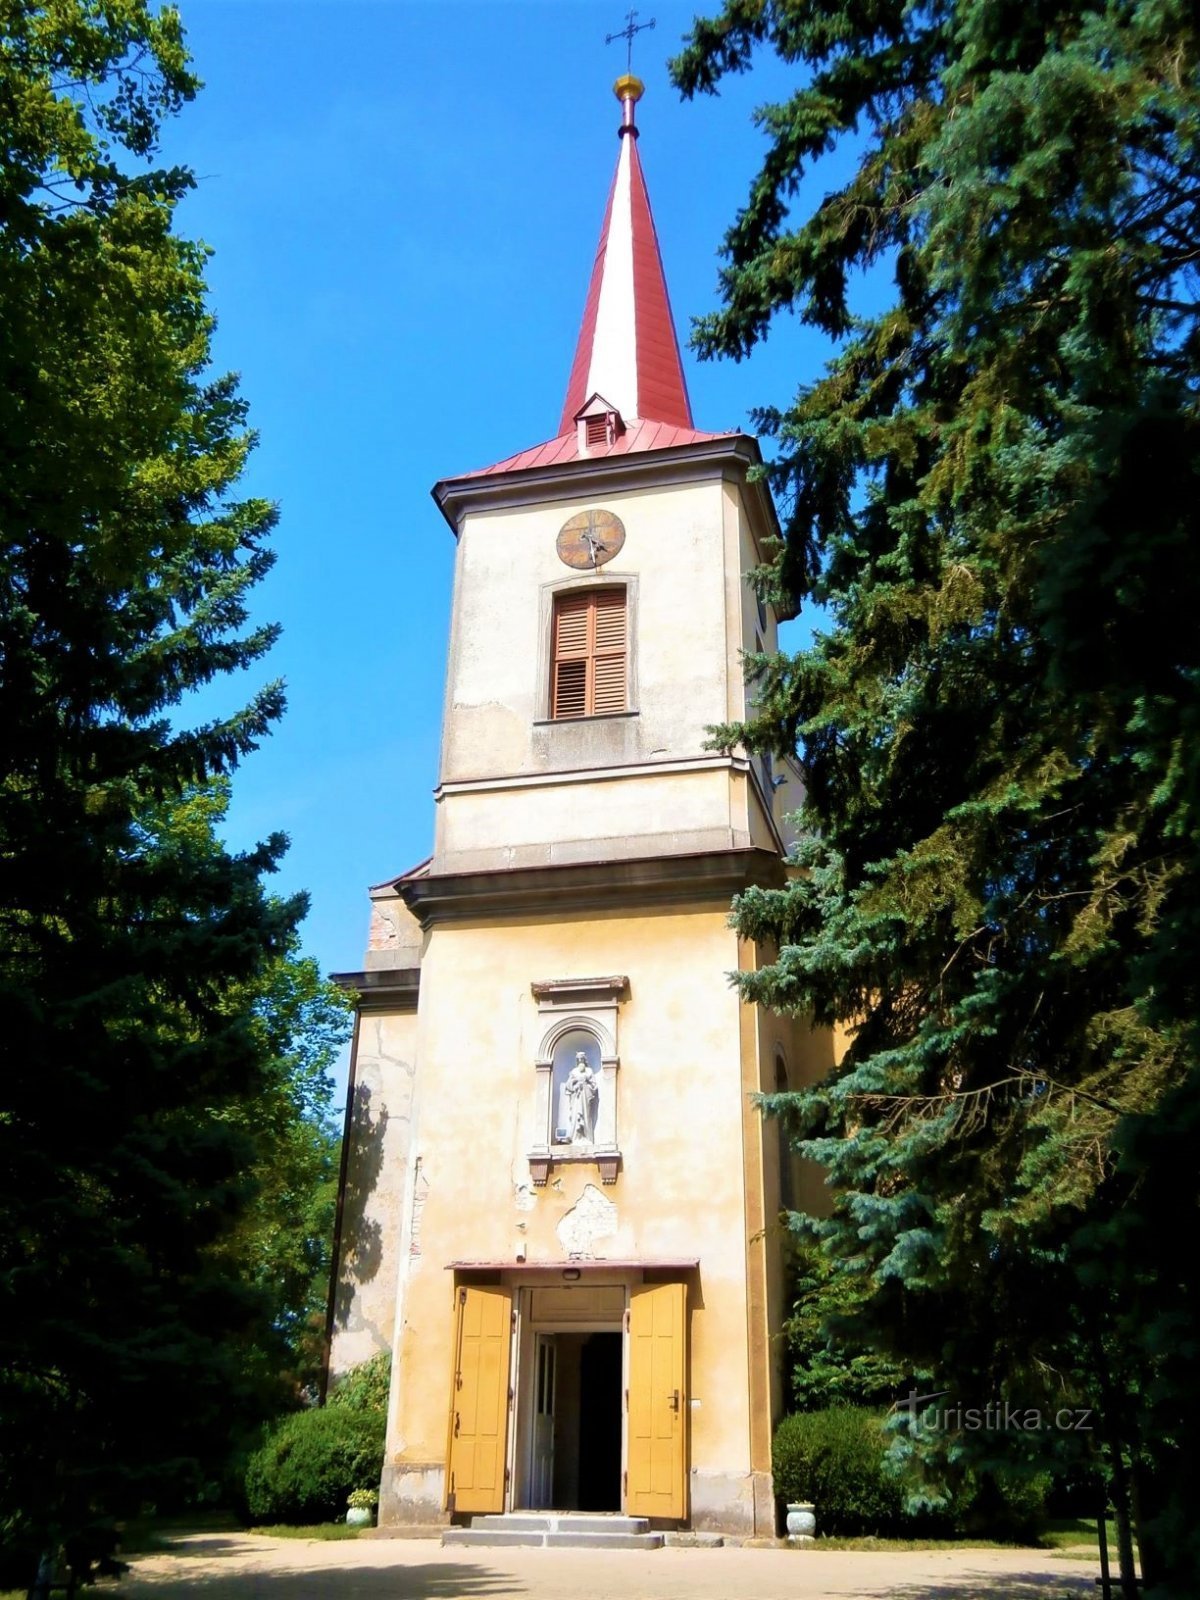 Kościół św. Štěpán (Černilov, 22.7.2017 lipca XNUMX)